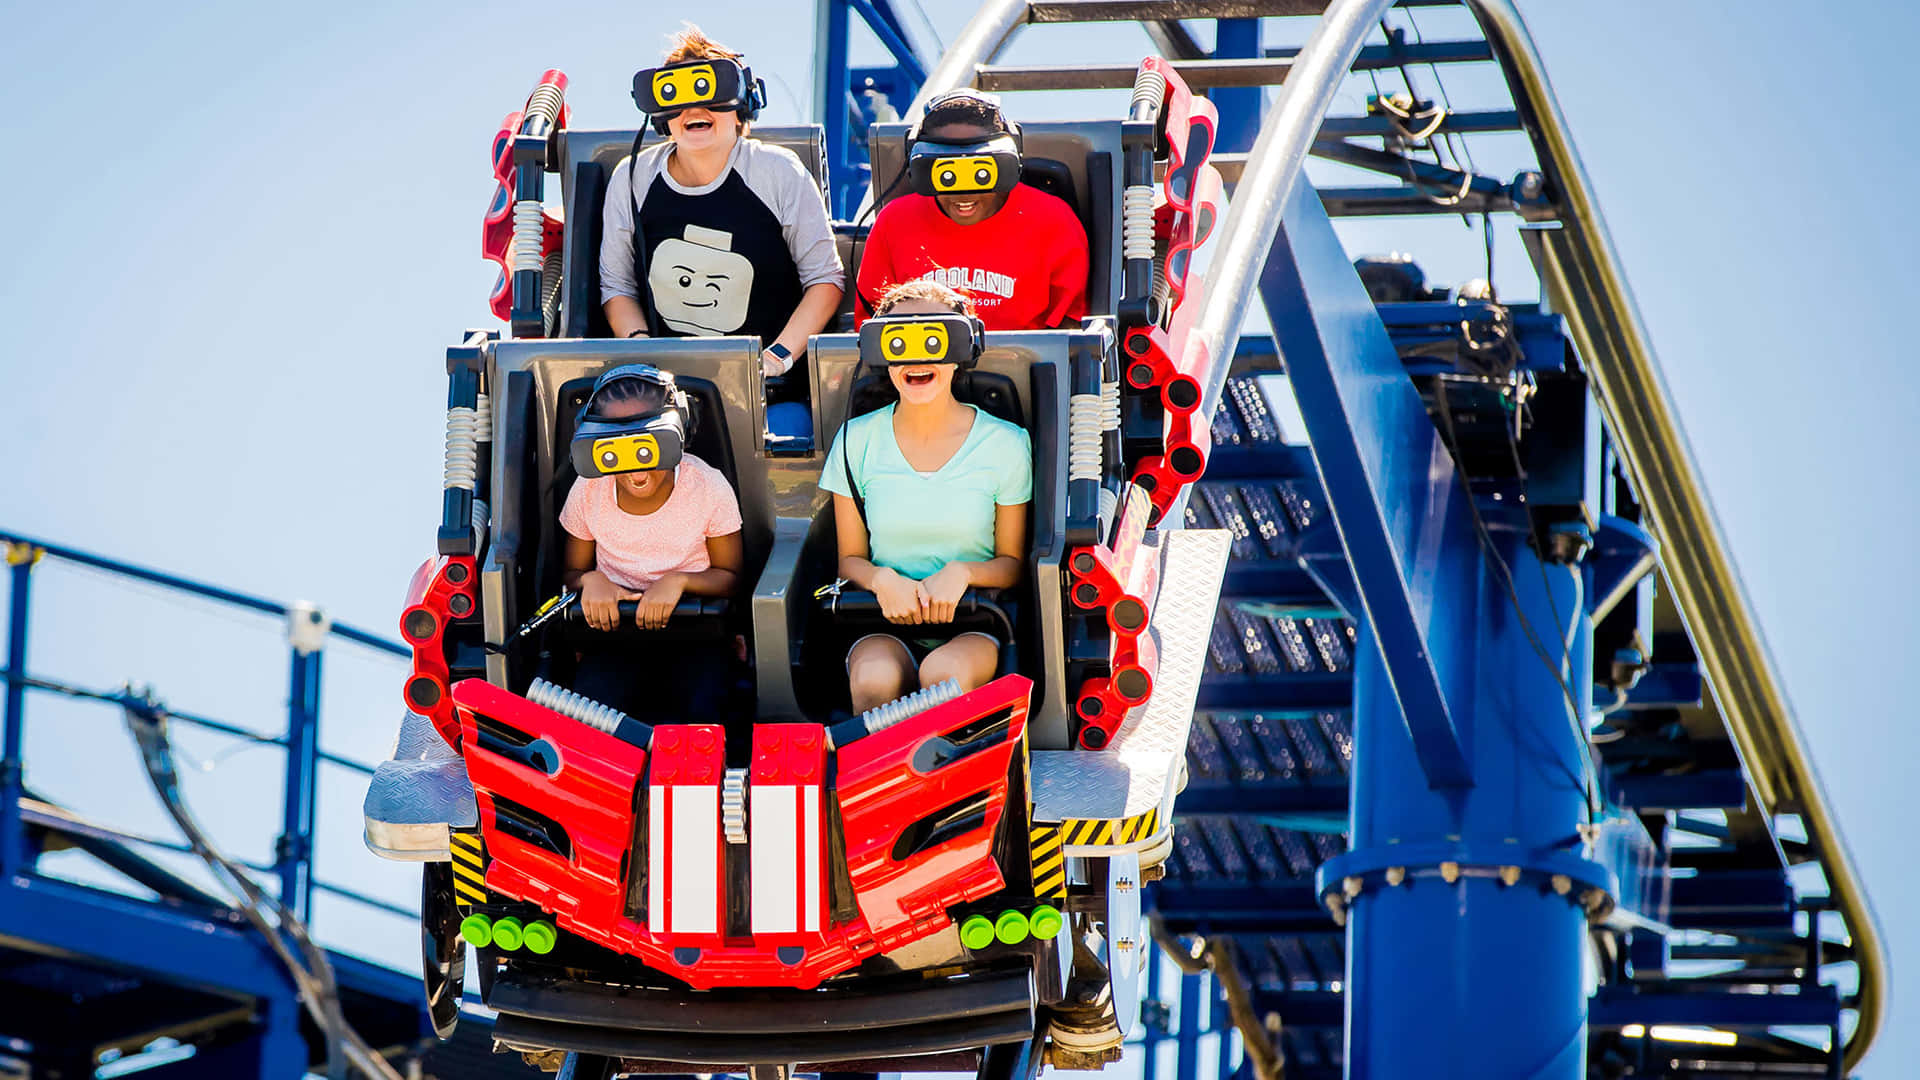 Enjoy a summer day out at Legoland® Windsor!